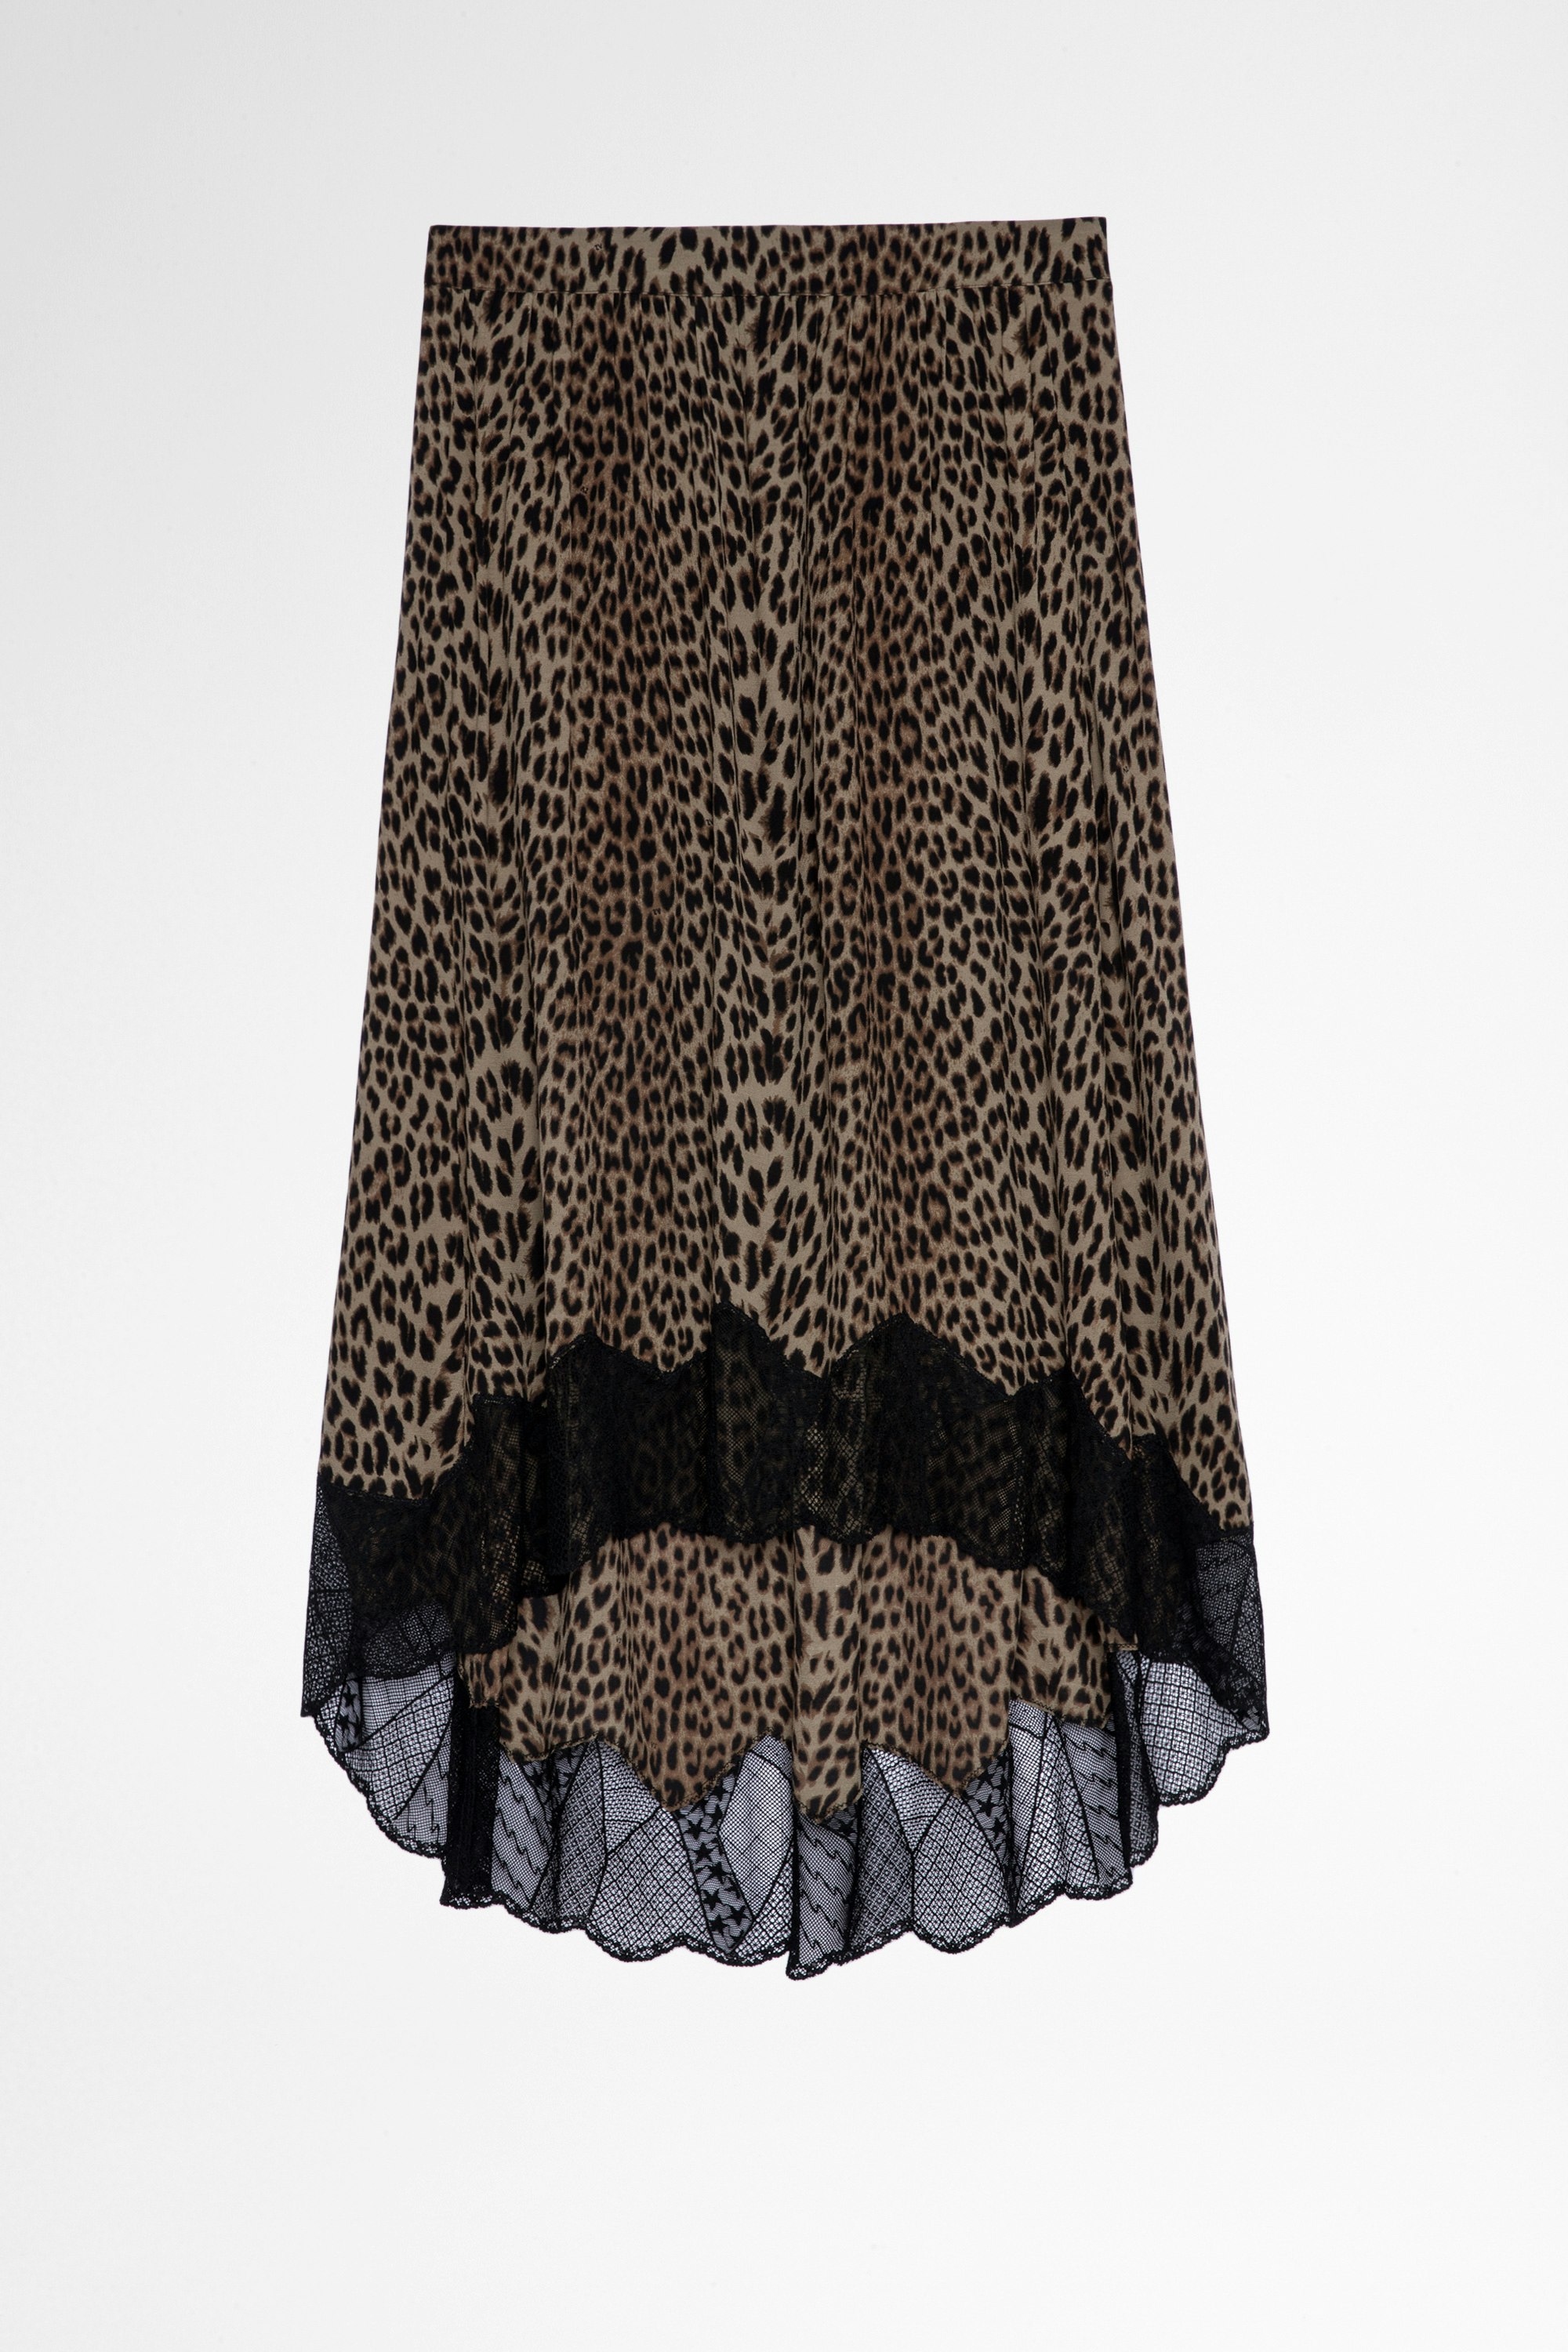 Jupe Joslin Leopard Jupe mi-longue asymétrique kaki imprimé léopard Femme